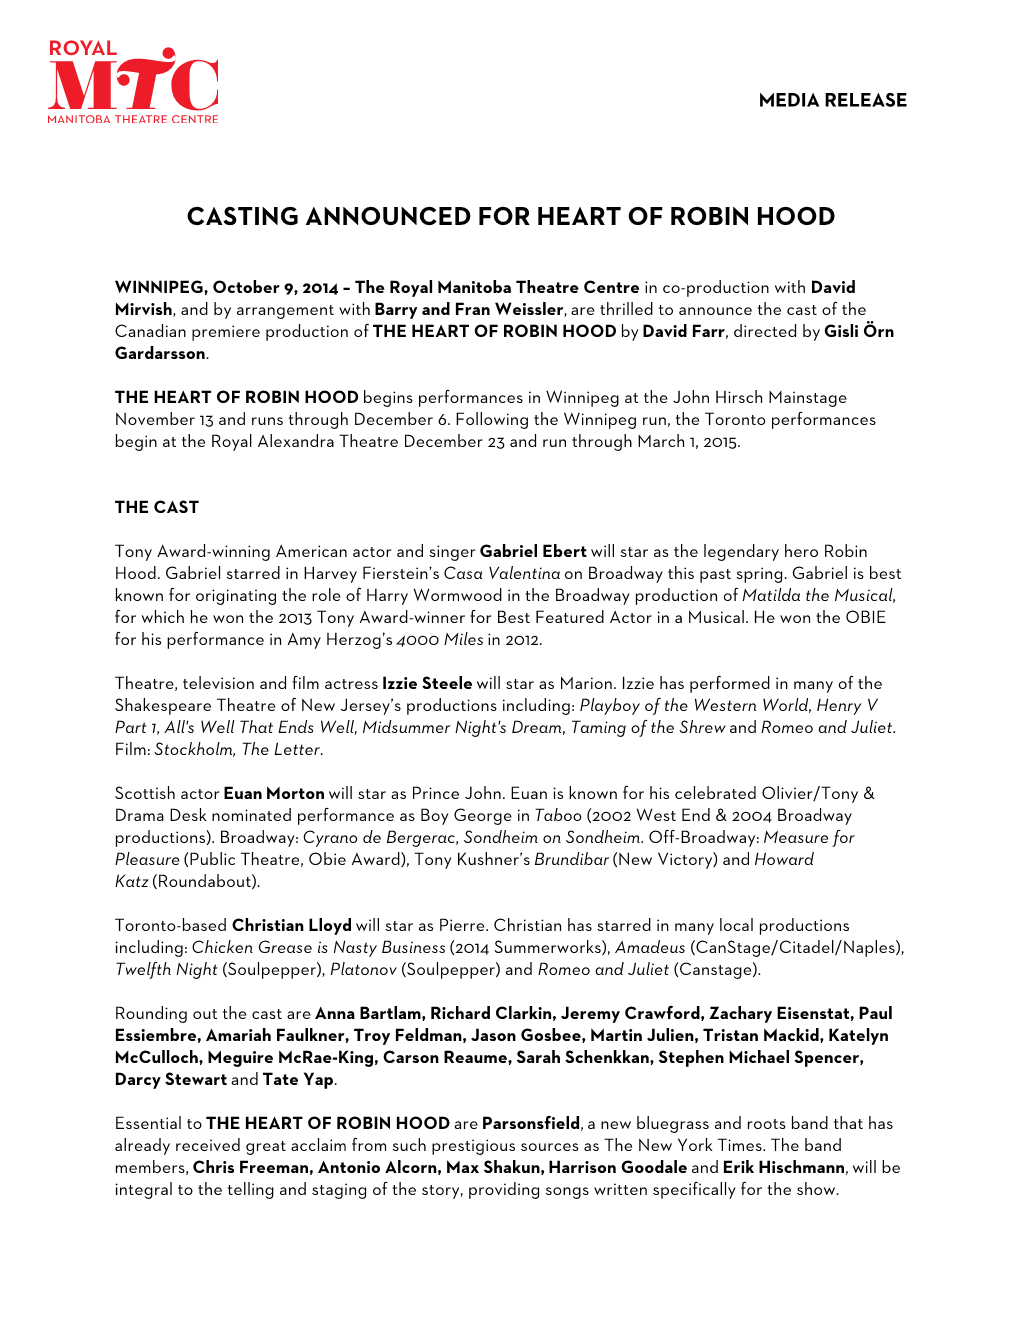 Casting Announced for Heart of Robin Hood